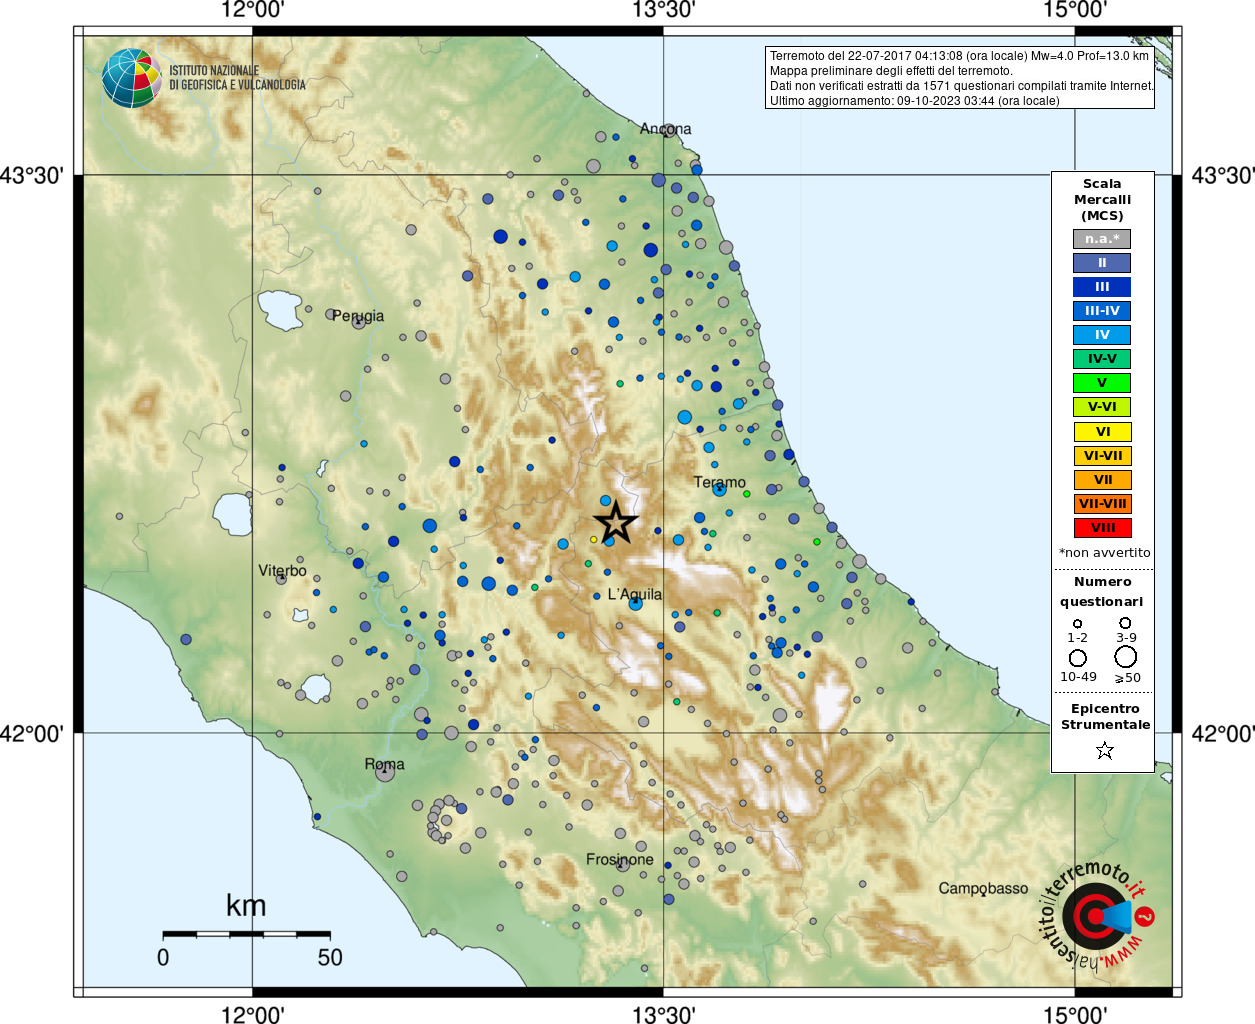 Earthquake 4 km W Campotosto (AQ), Magnitude Mw 4.0, 22 July 2017 time 02:13:08 ...1251 x 1024